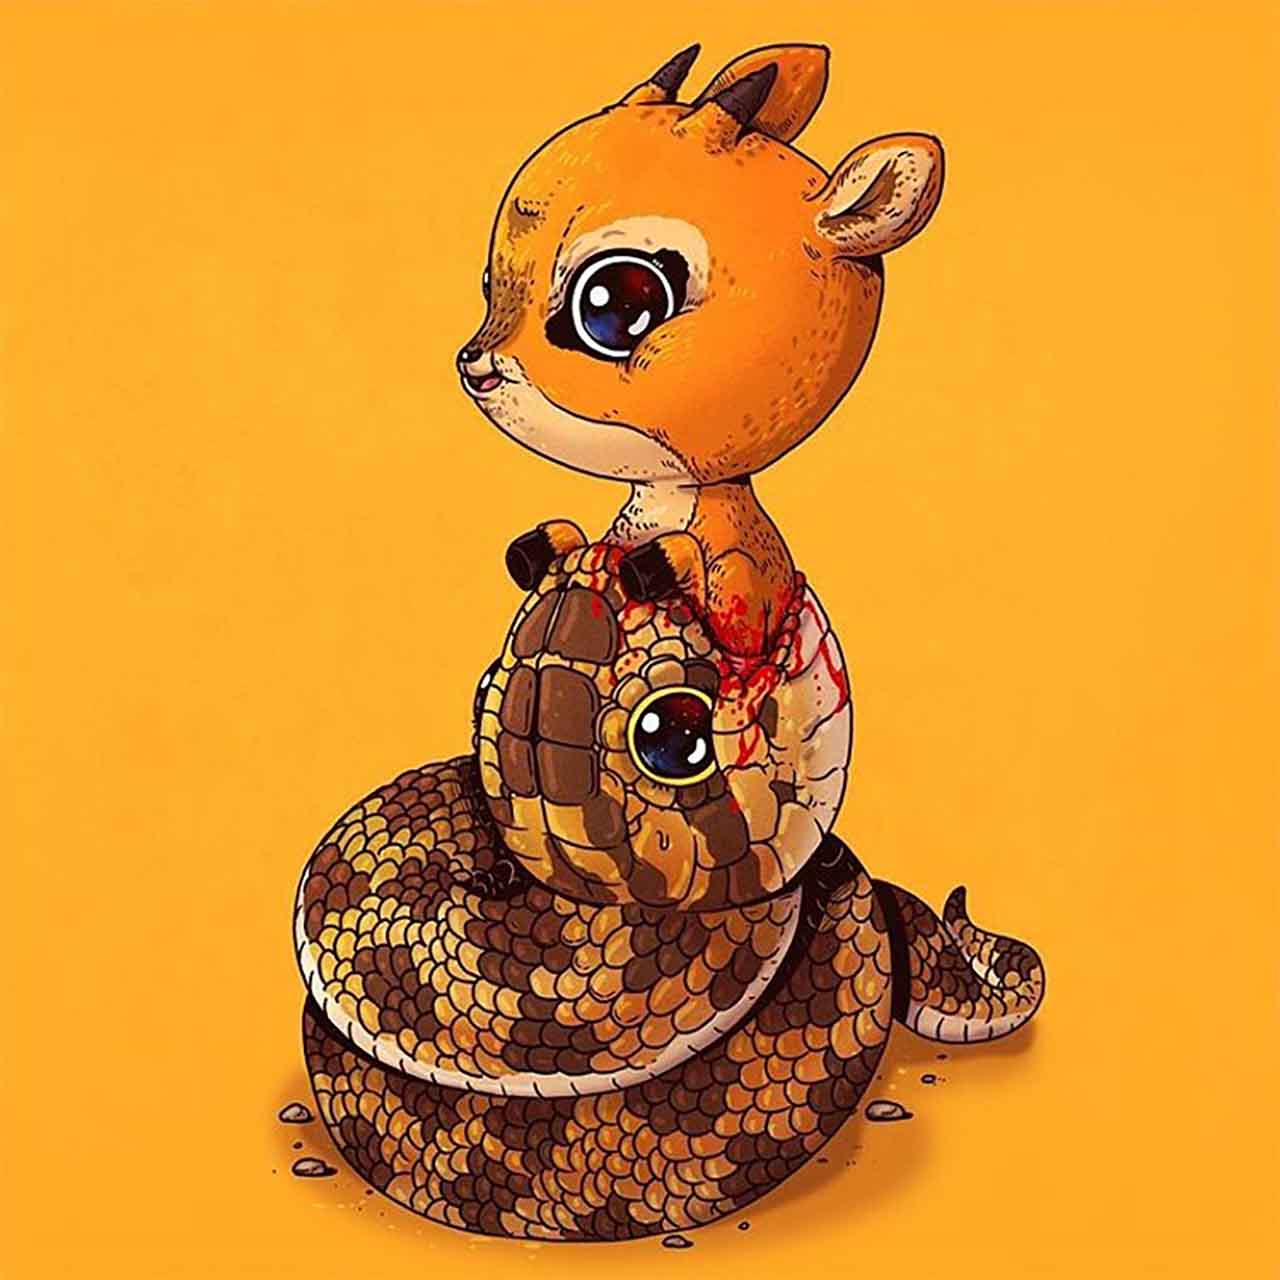  Artist Creates Extremely Adorable “Predator & Prey” Illustrations #7: Python & Antelope 